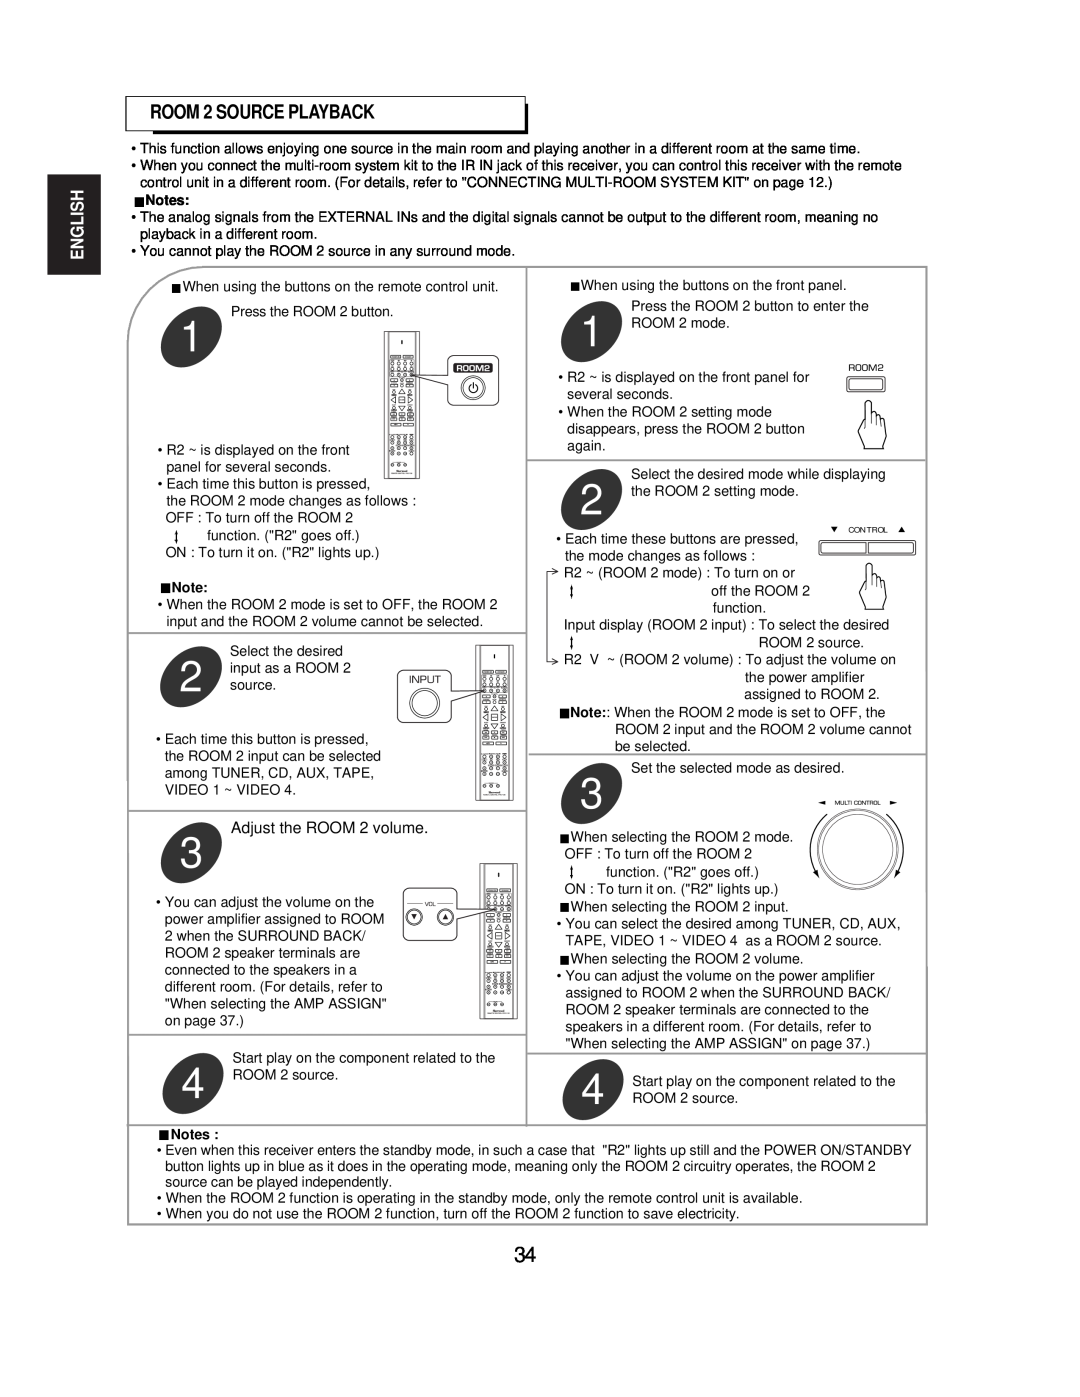 Sherwood R-771 manual ROOM 2 SOURCE PLAYBACK, English, Adjust the ROOM 2 volume 